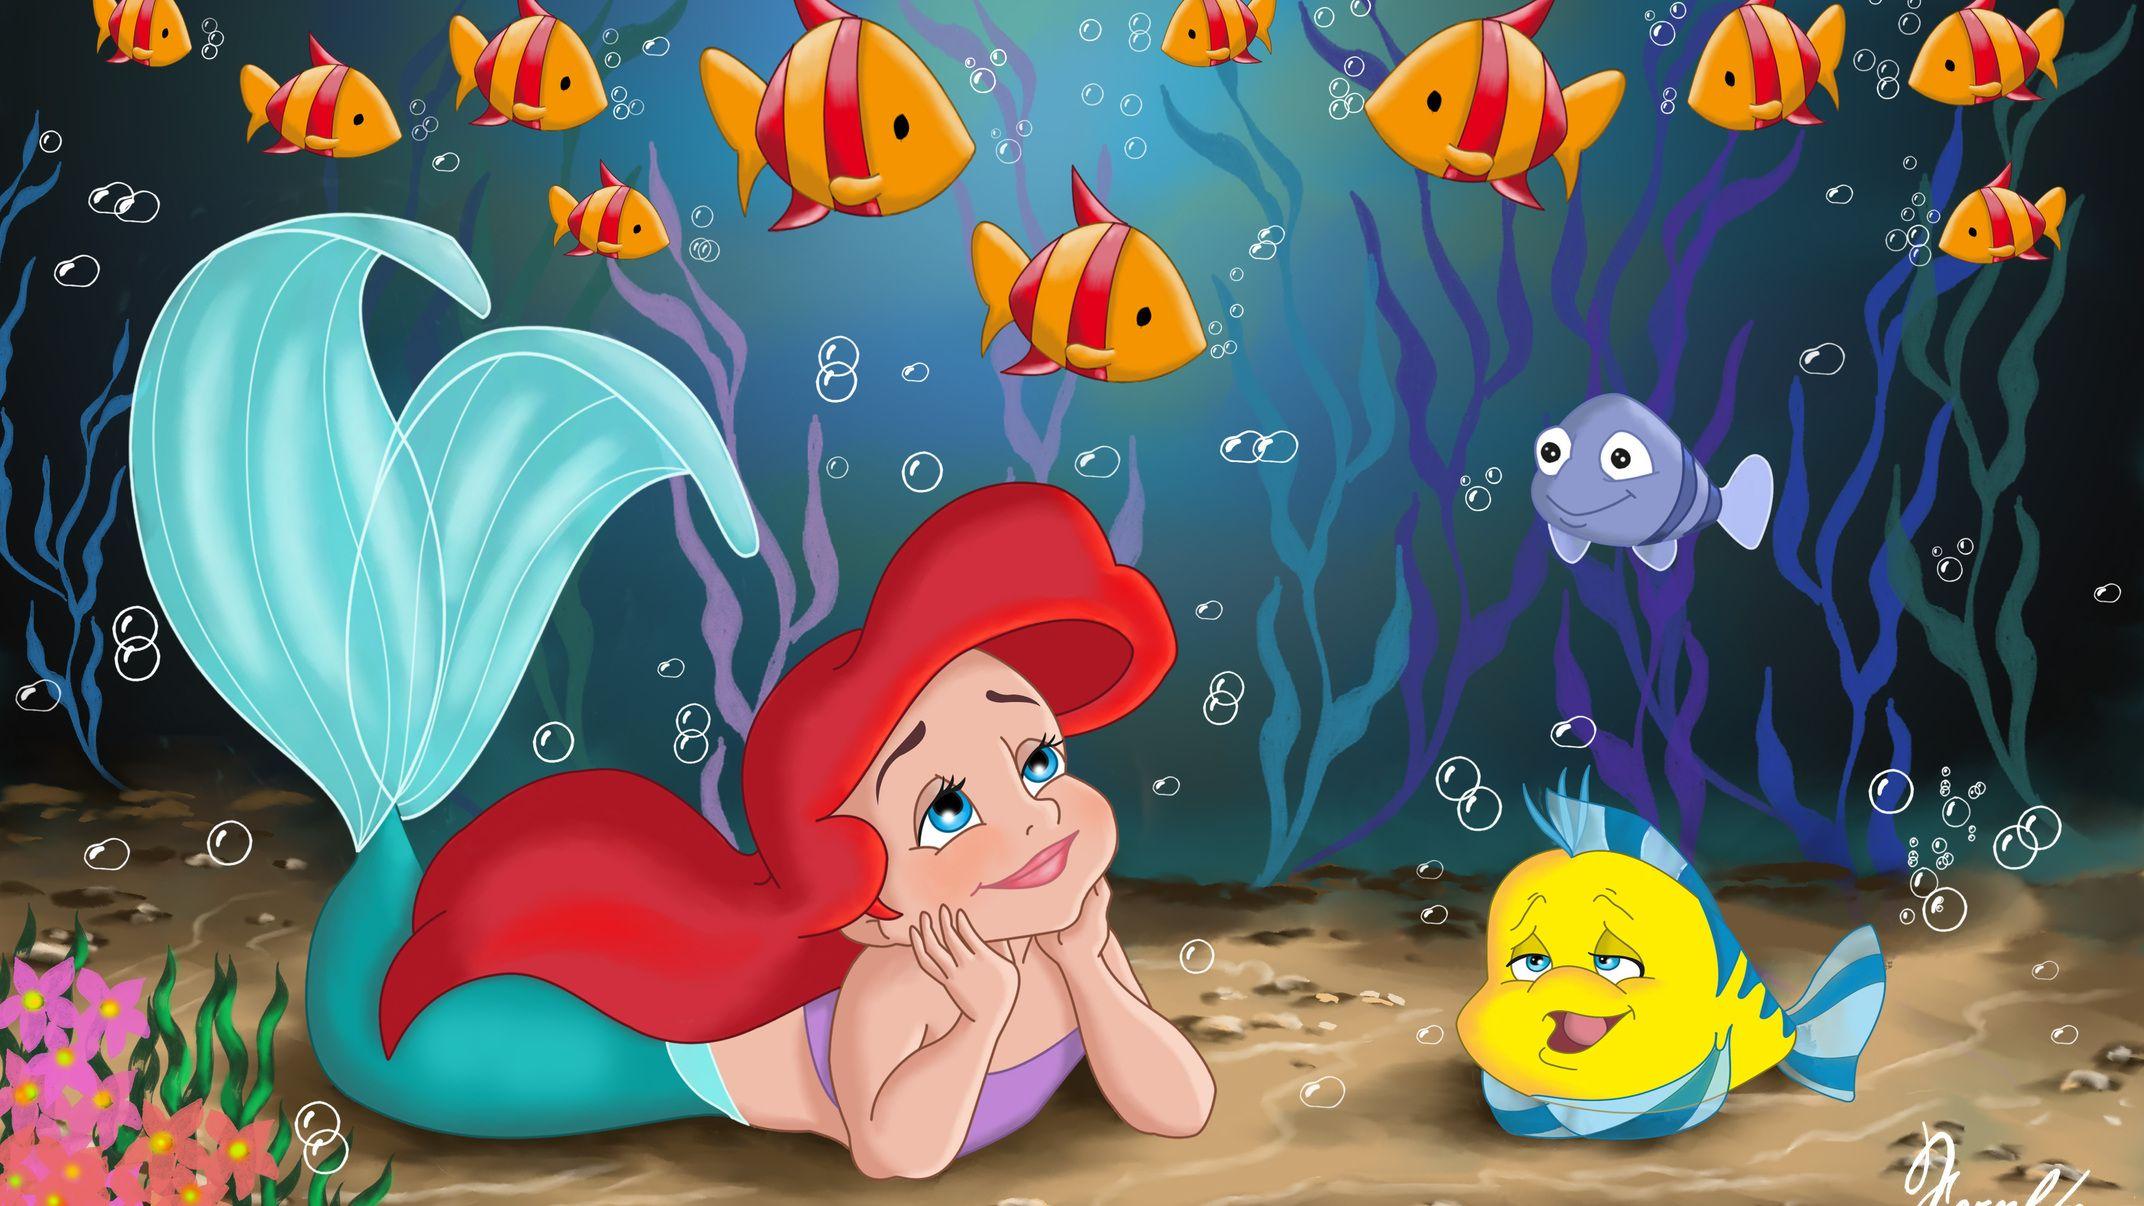 The Little Mermaid Cartoon Image Wallpaper for iPad Air 2